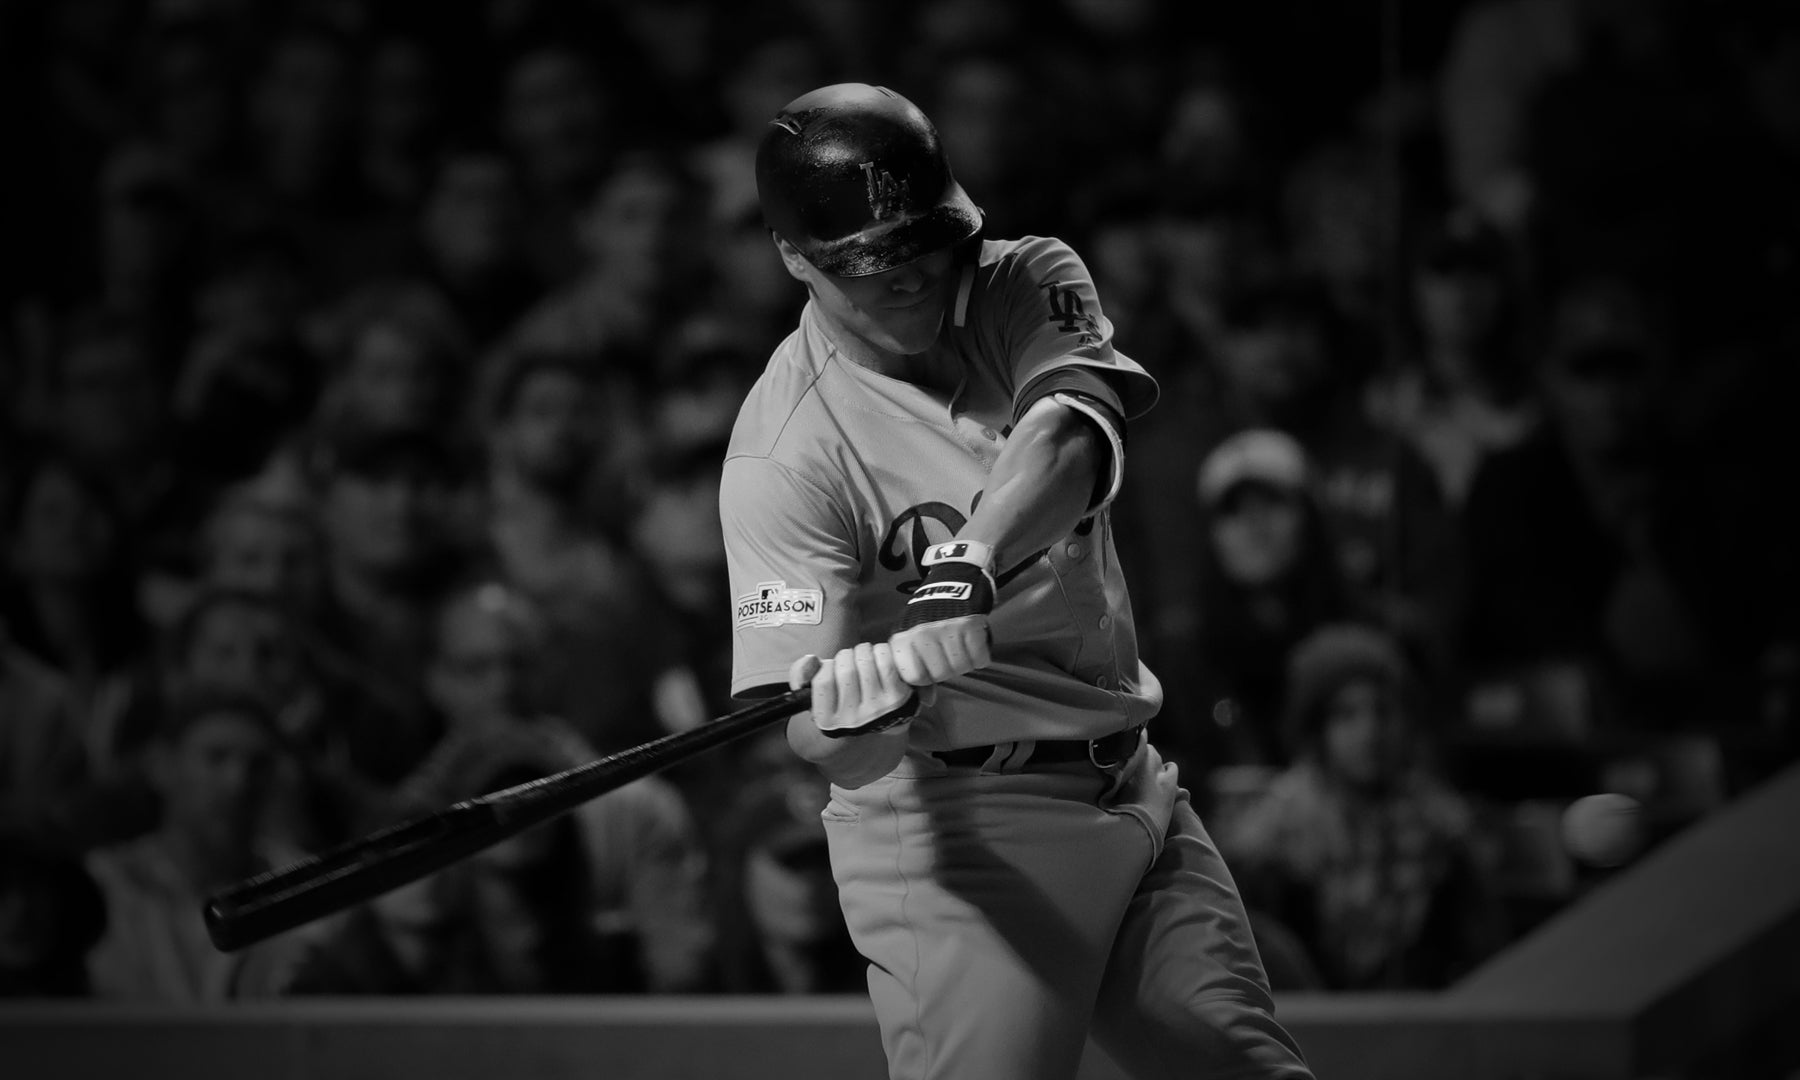 MLB Boston Red Sox (Enrique Hernandez) Men's Replica Baseball Jersey.